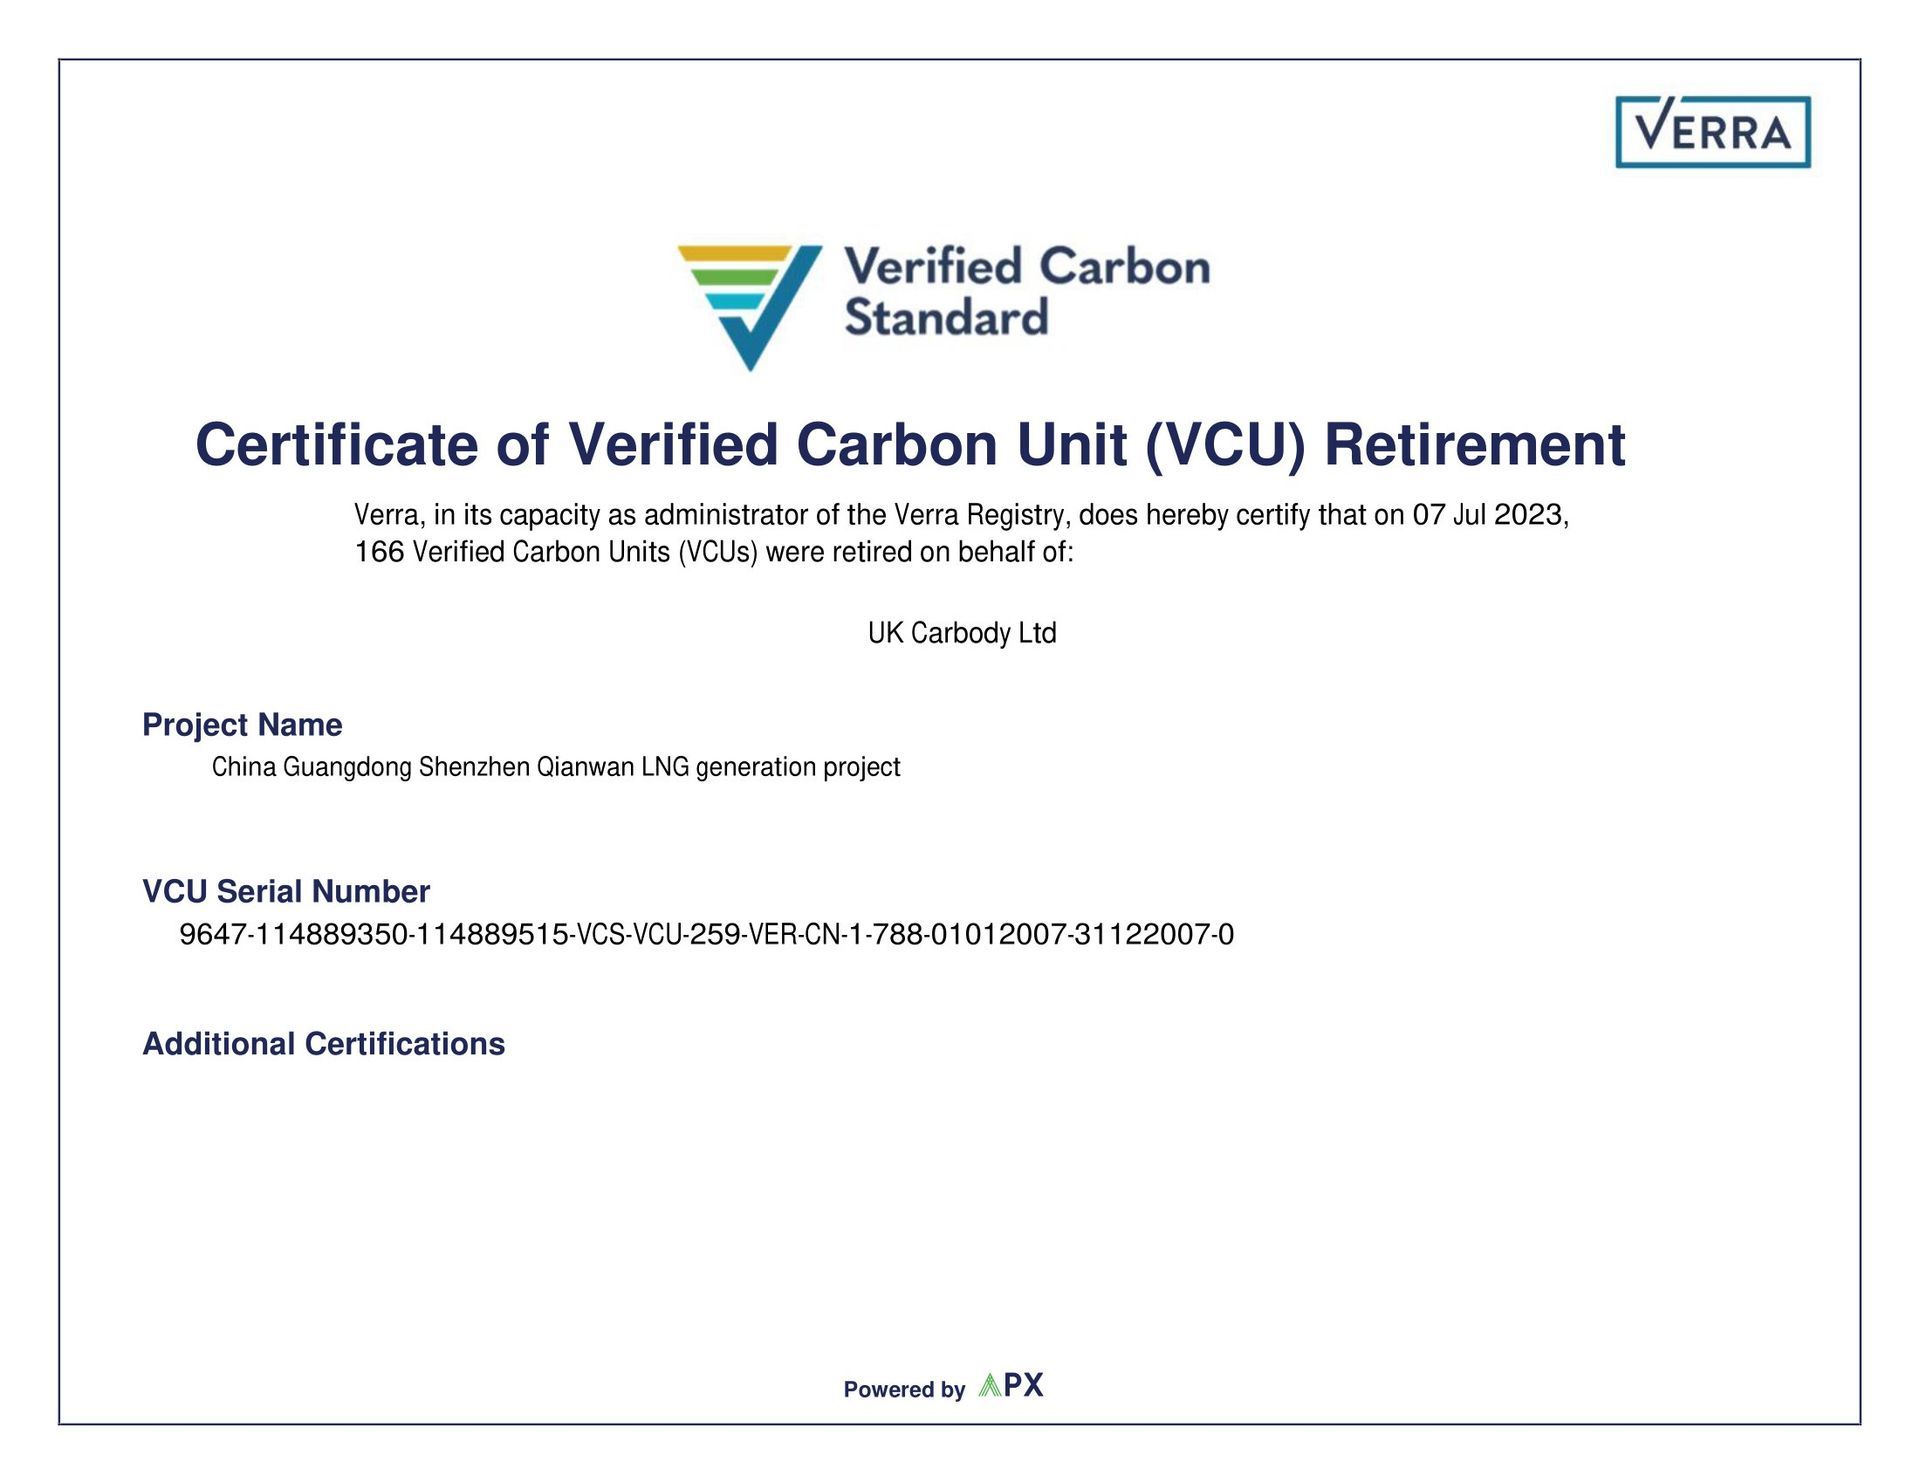 UK Carbody | Certificate of Verified Carbon Unit (VCU) Retirement